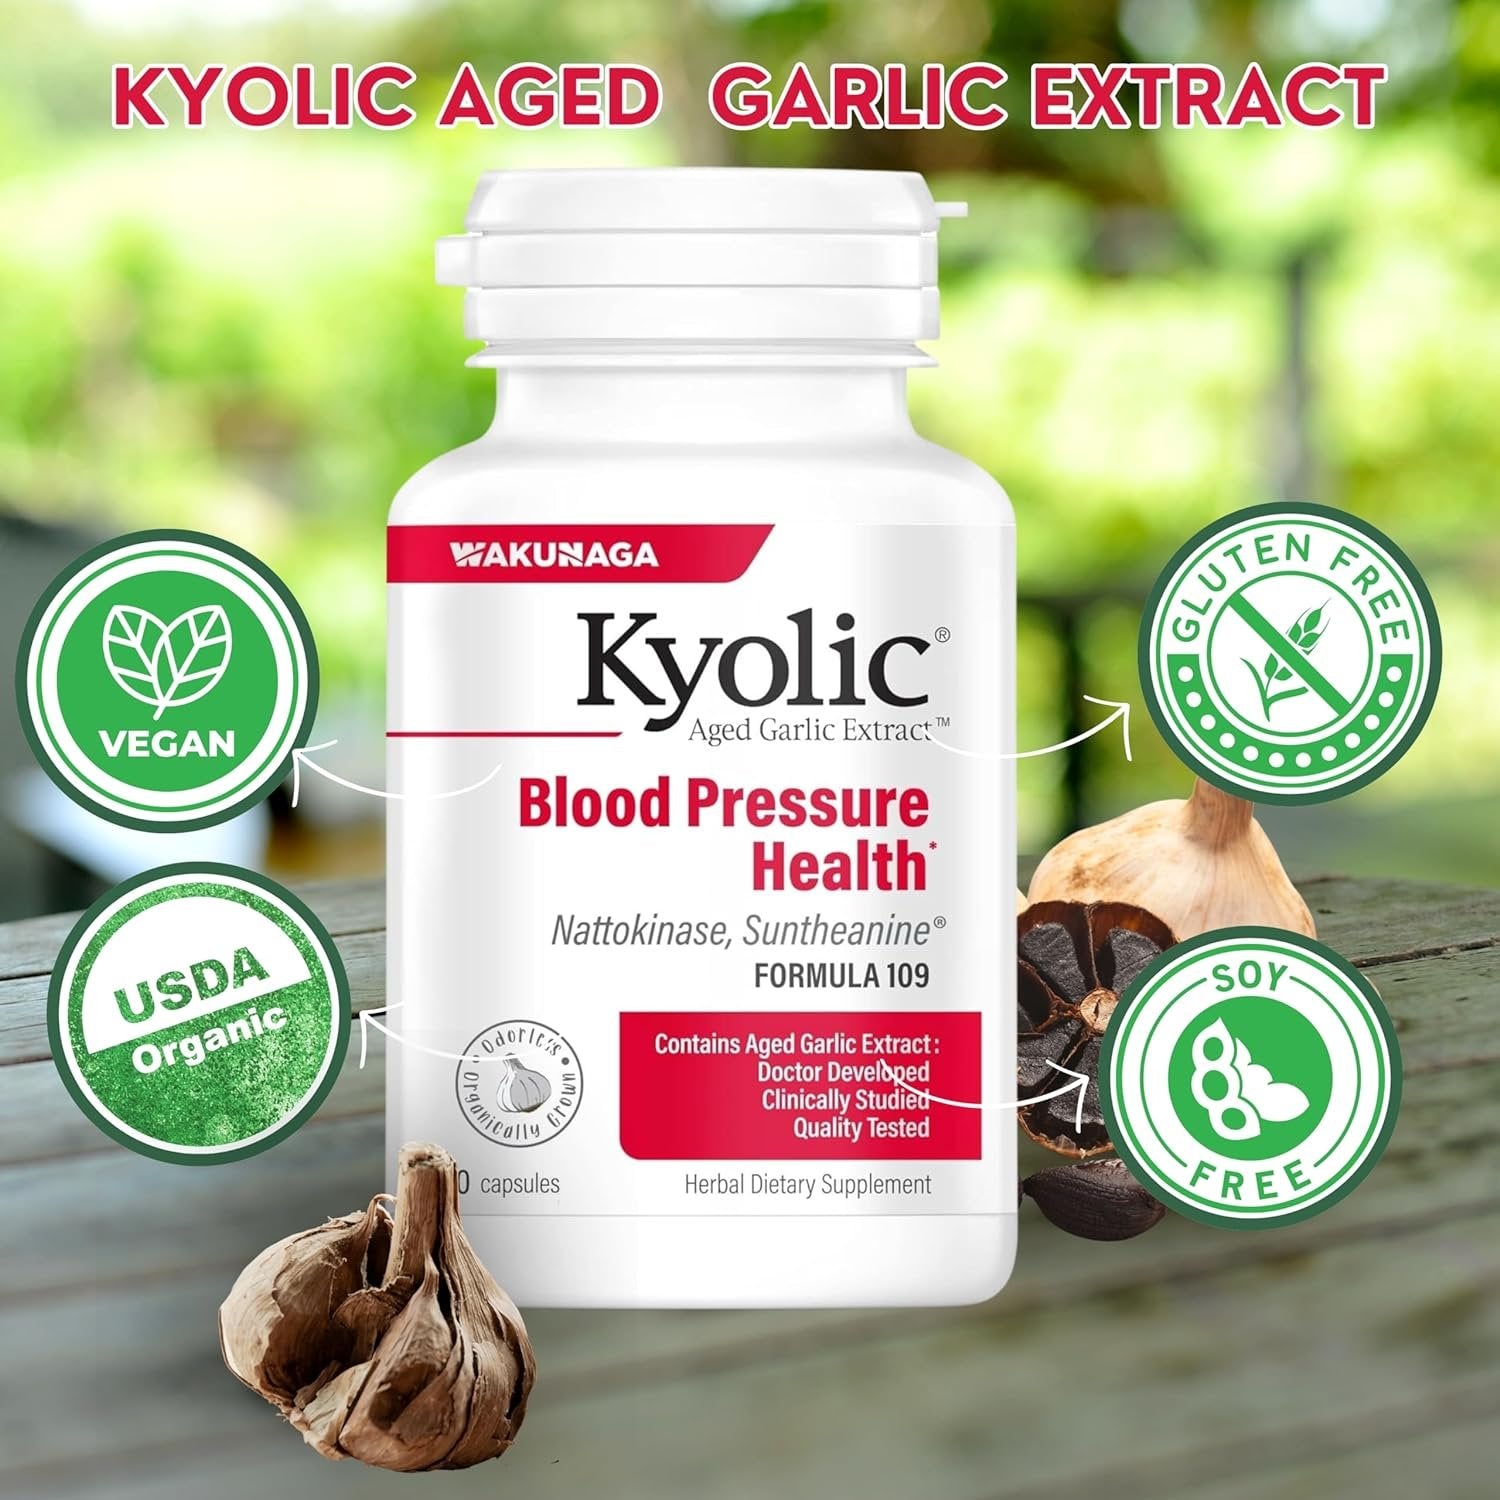 Kyolic Aged Garlic Extract Blood Pressure Health Formula 109 - Organic Garlic Supplement Odorless and Non-GMO 80 Capsules with Multi-Purpose Key Chain